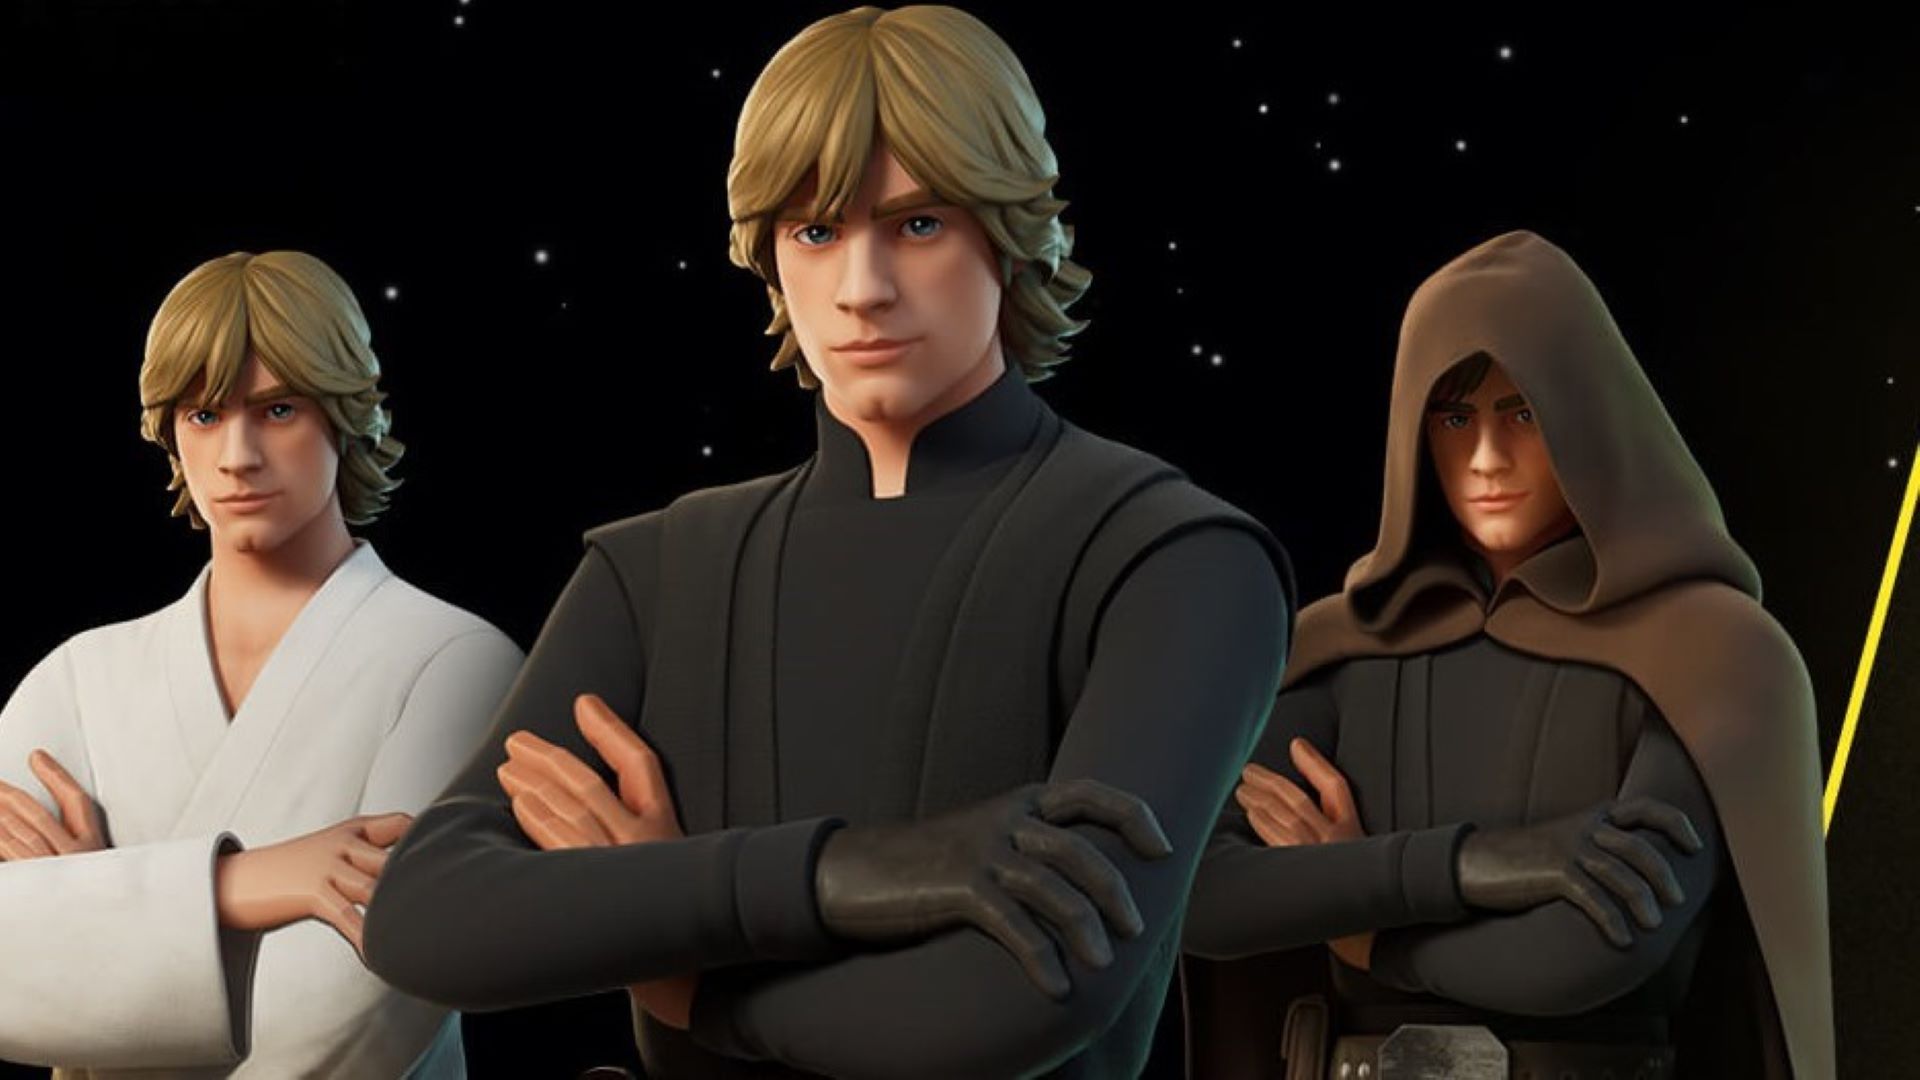 Fortnite Star Wars collaboration adds Han Solo, Luke, and Leia gear